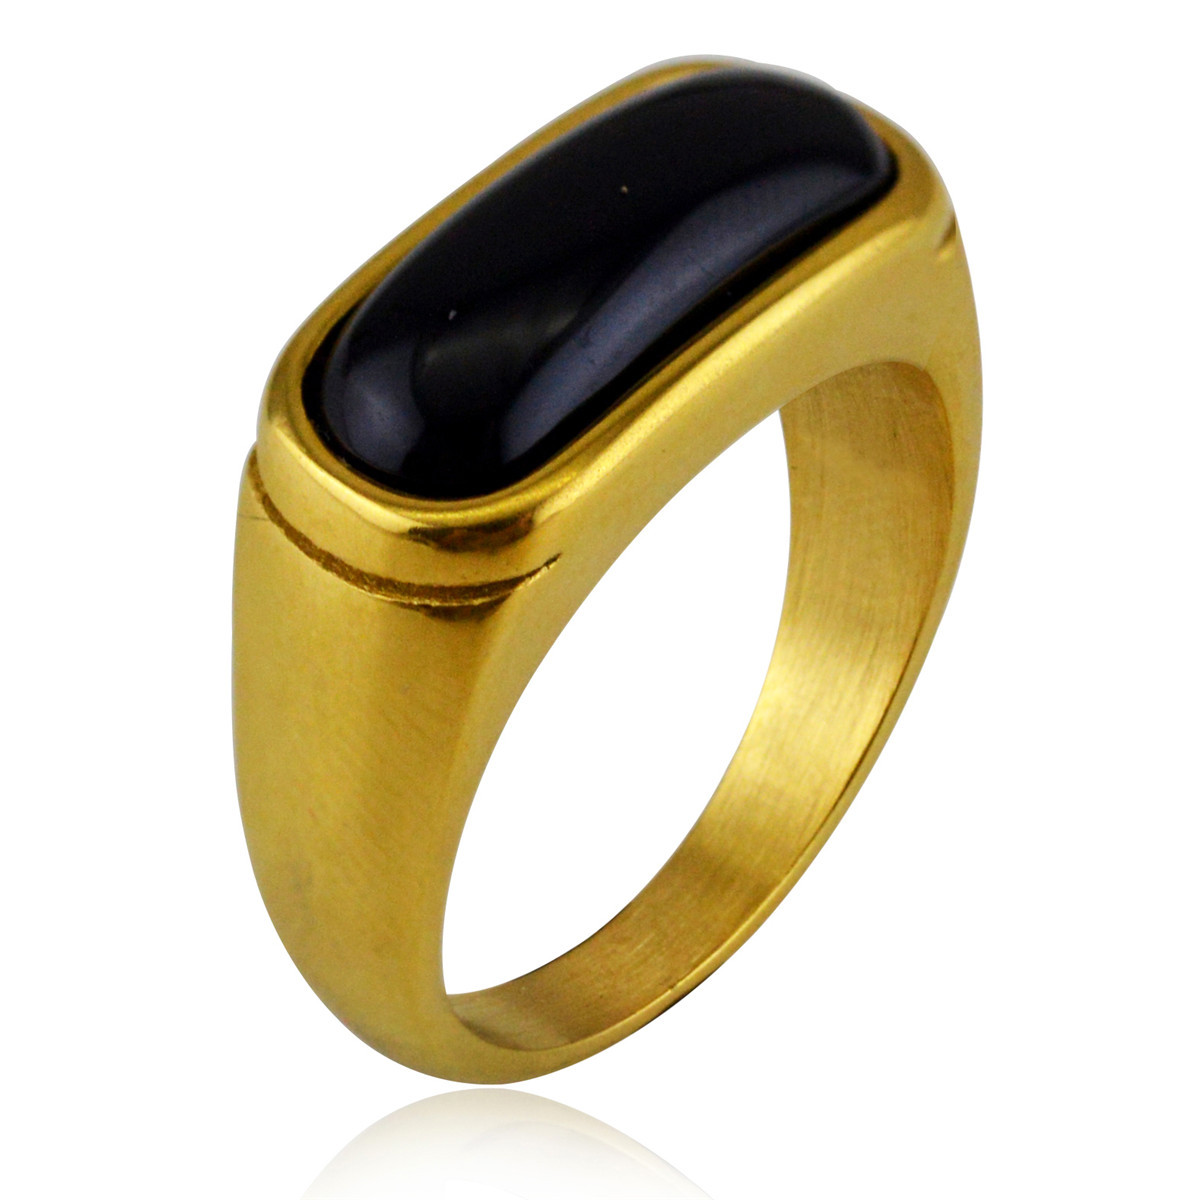 4:Golden black stone